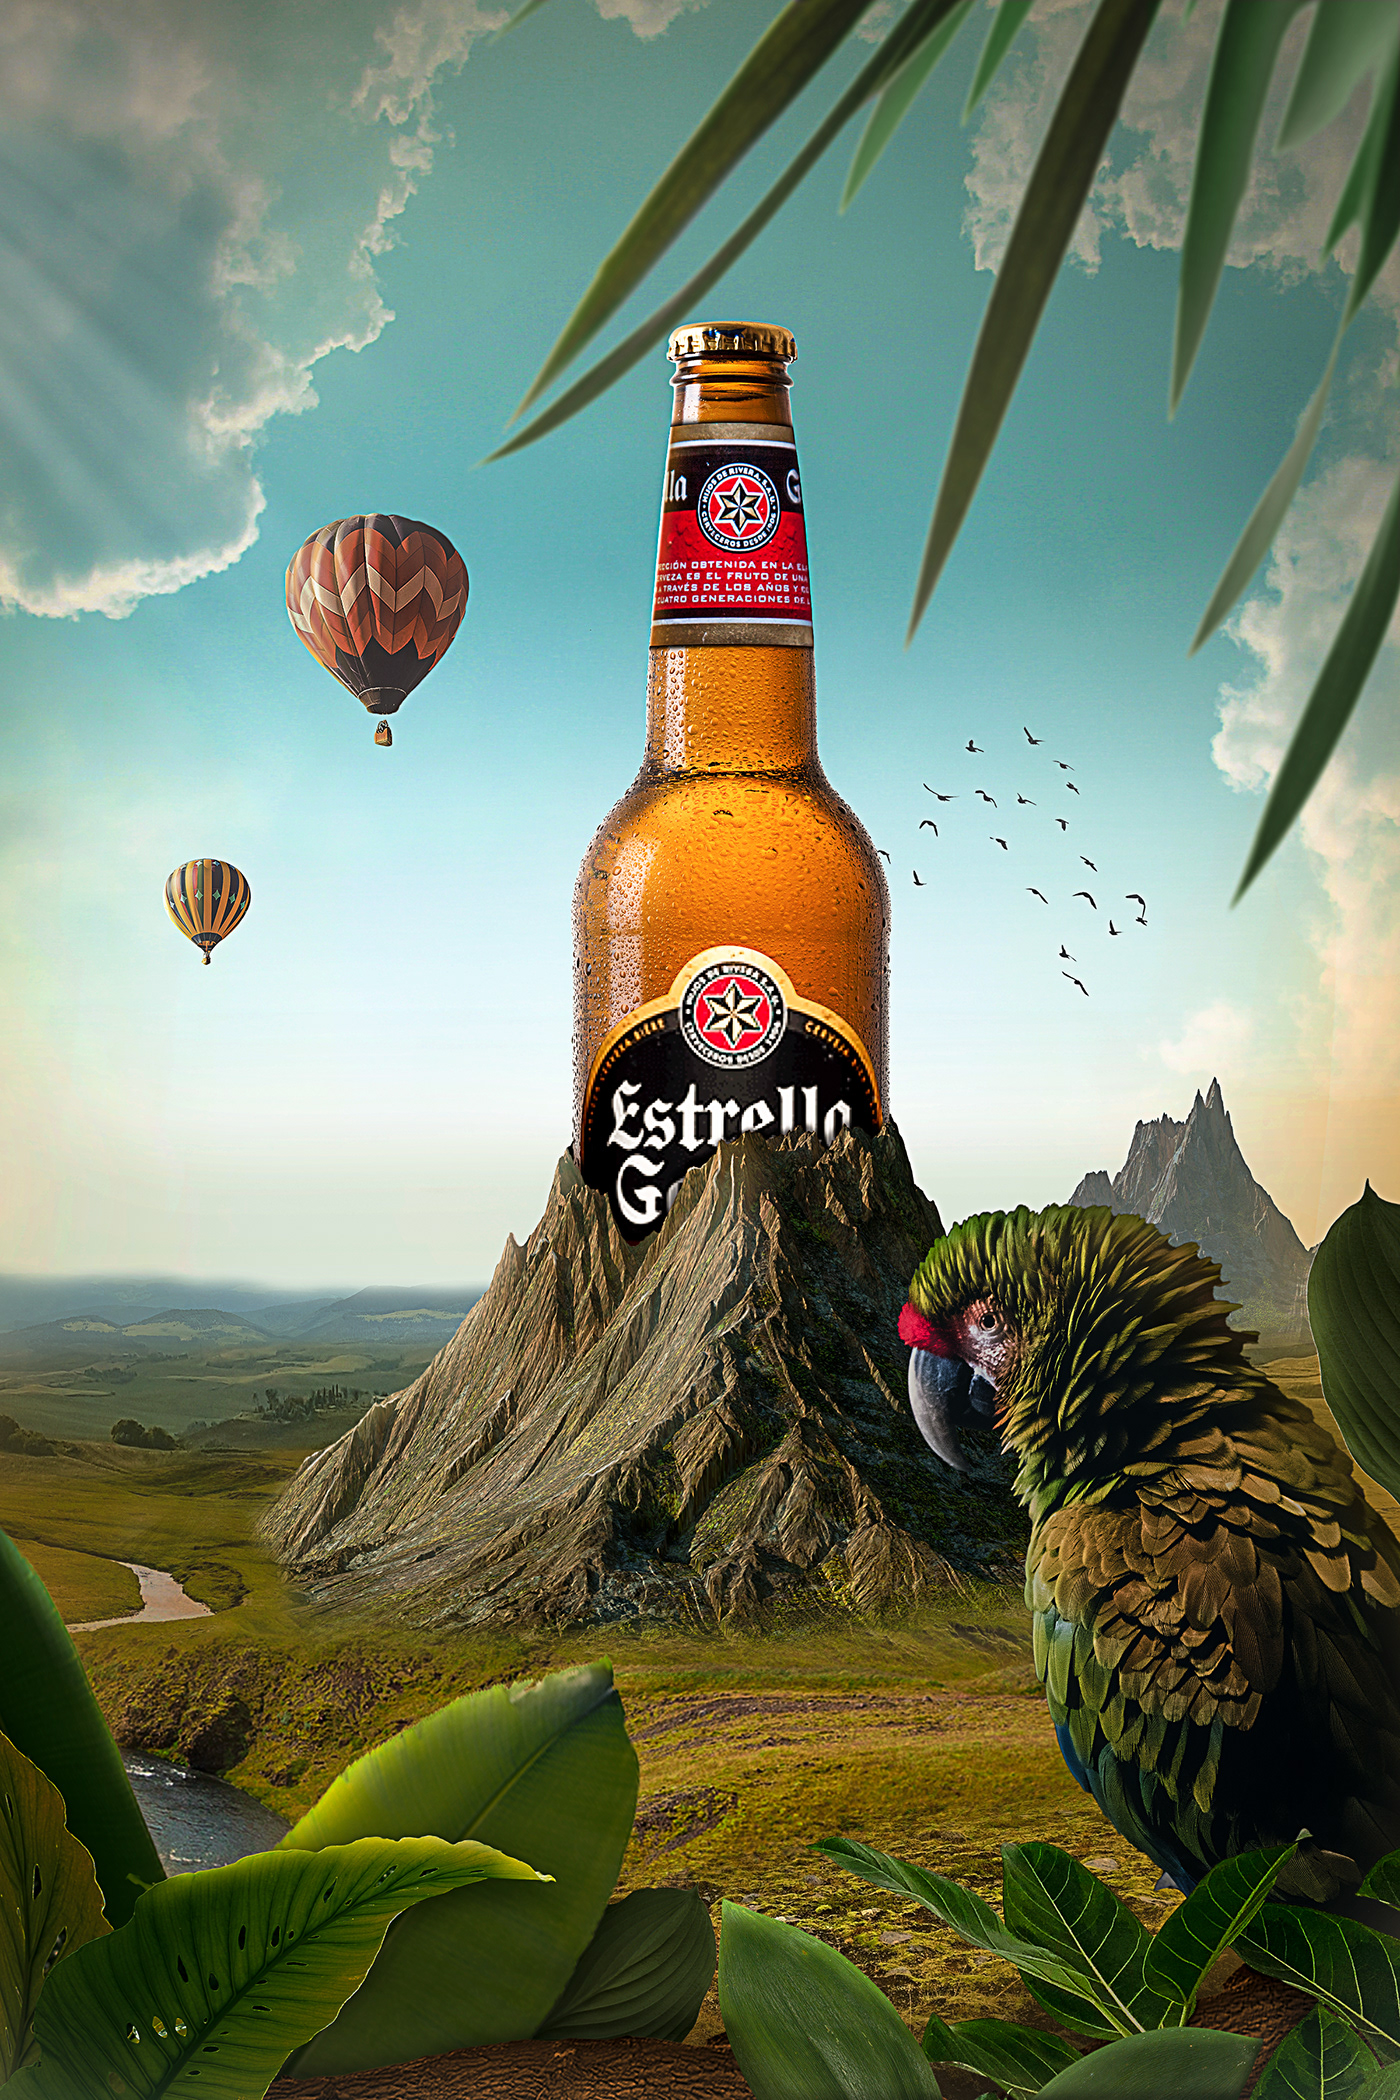 photoshop artwork Estrella Galicia Digital Art  Sunny parrot Bier mountains imagine world